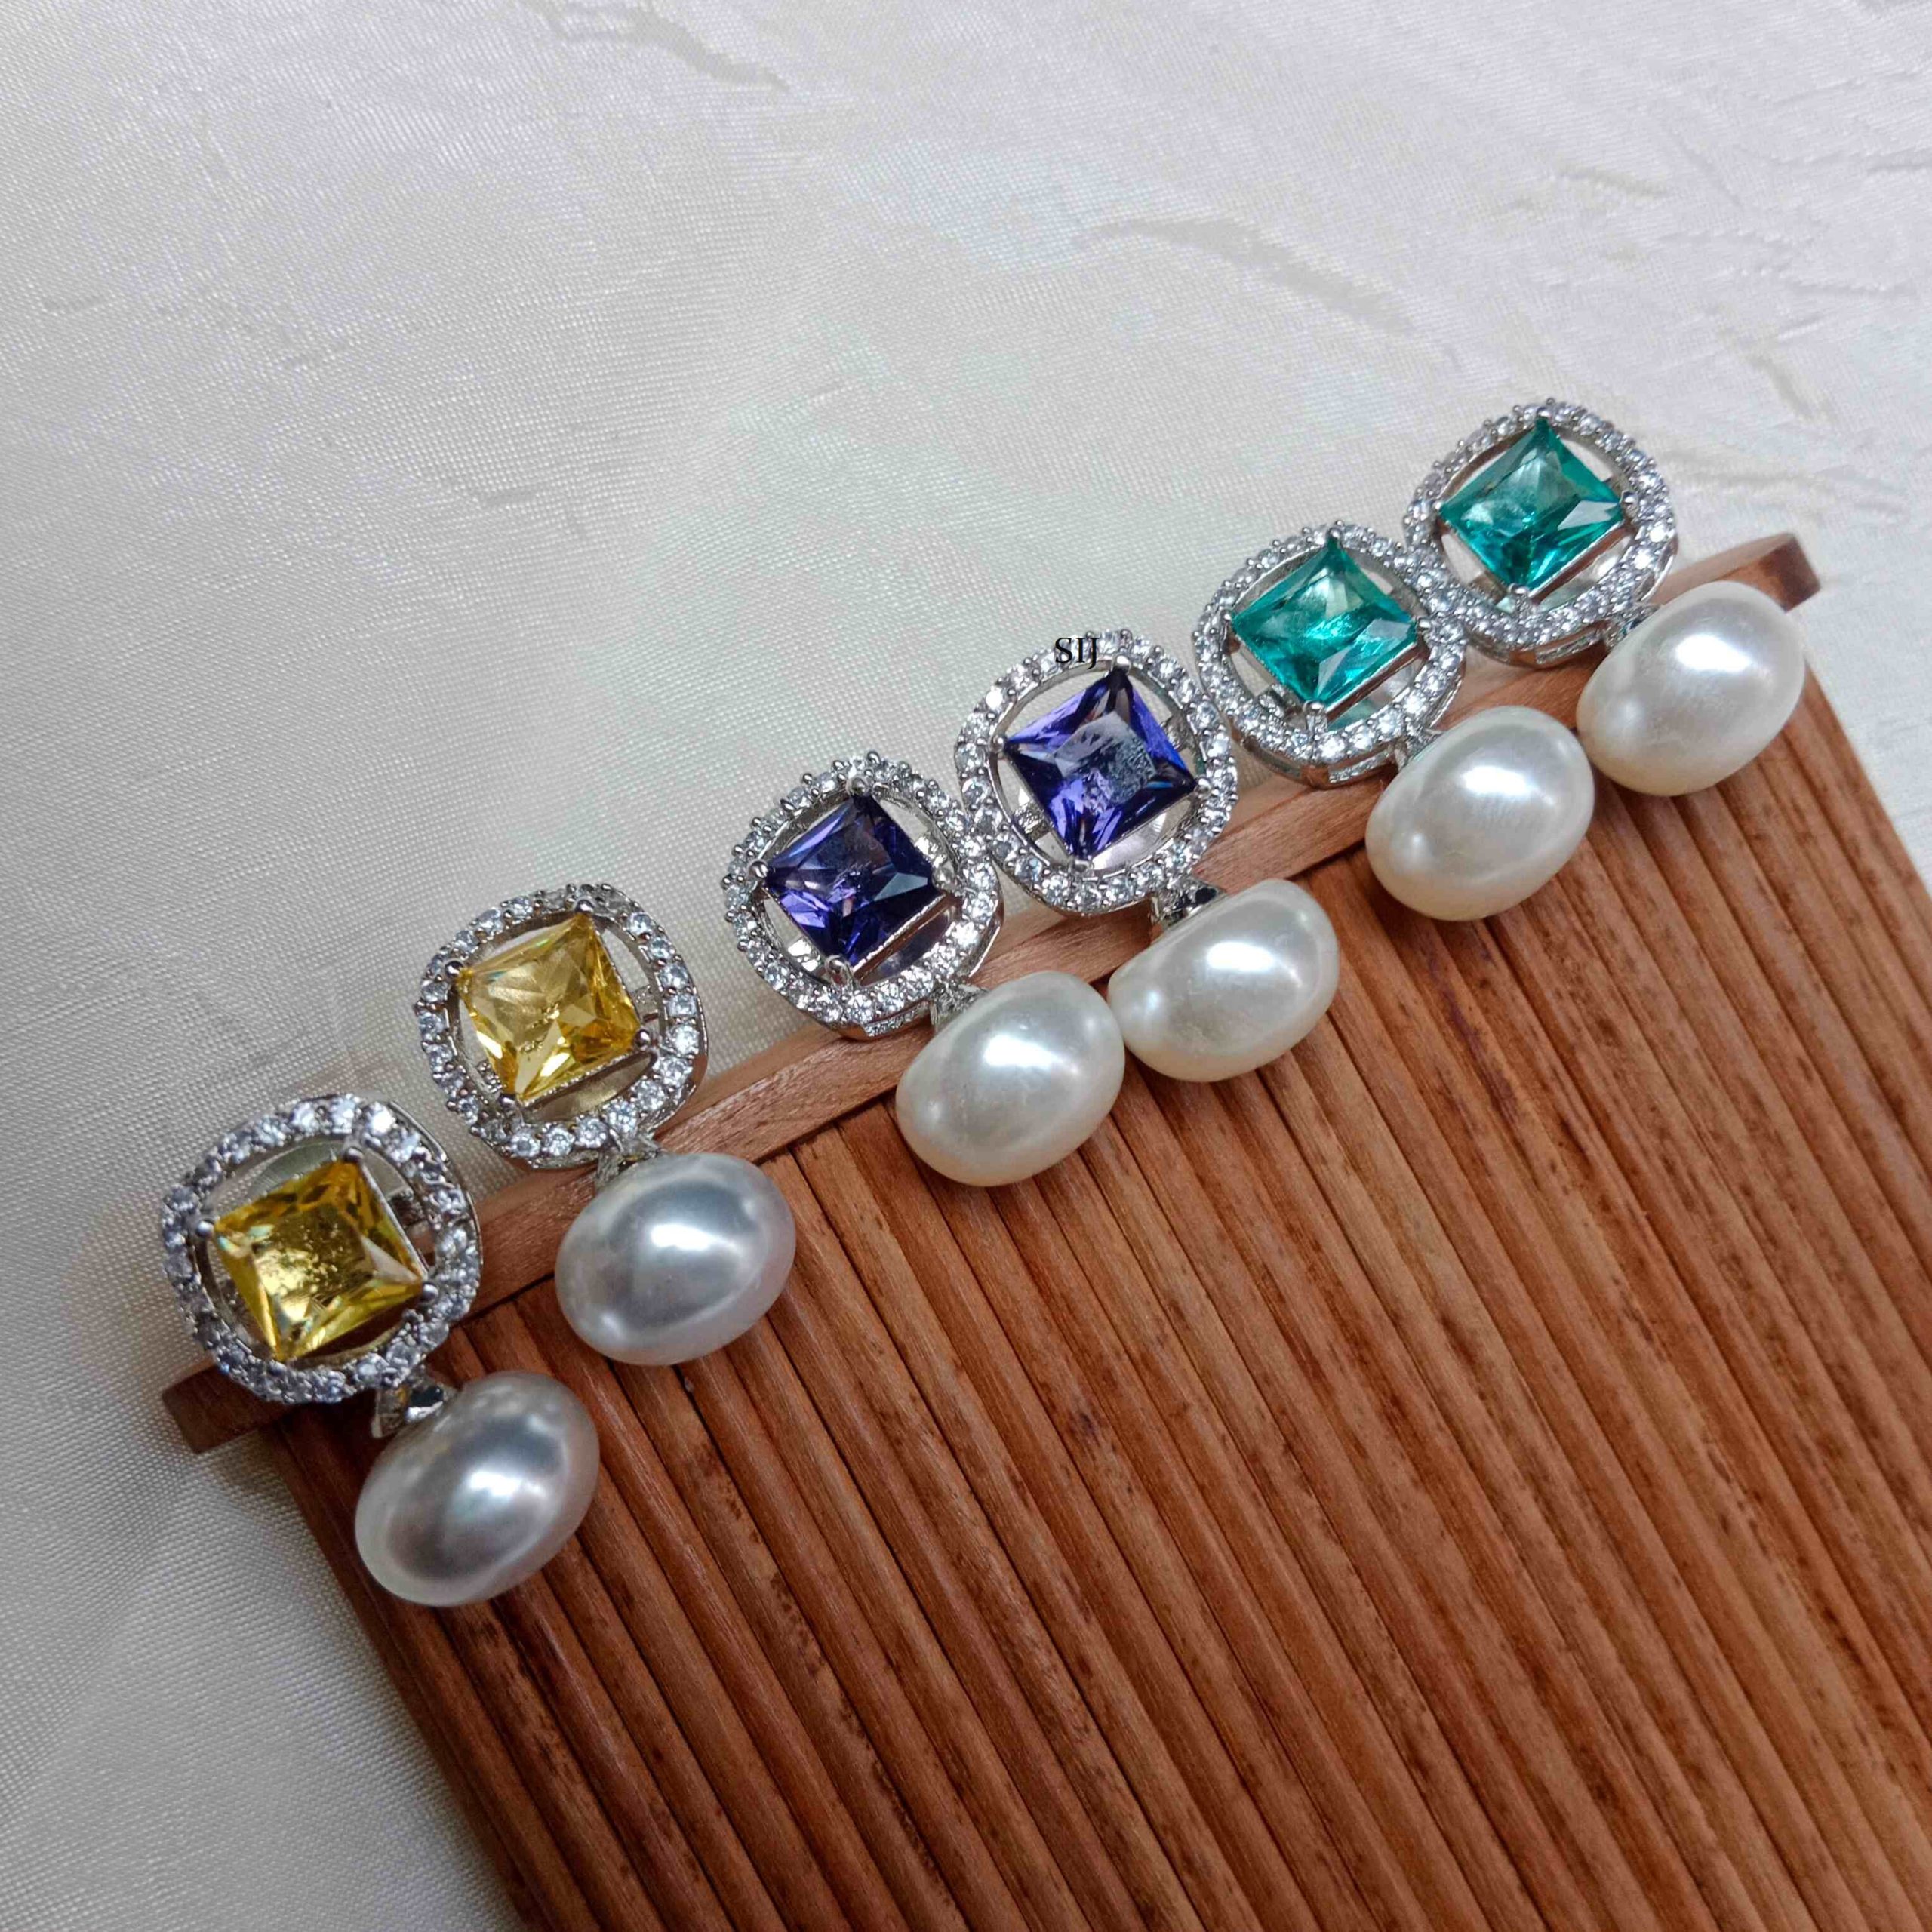 Imitation Gemstone Earrings with Pearl Drop